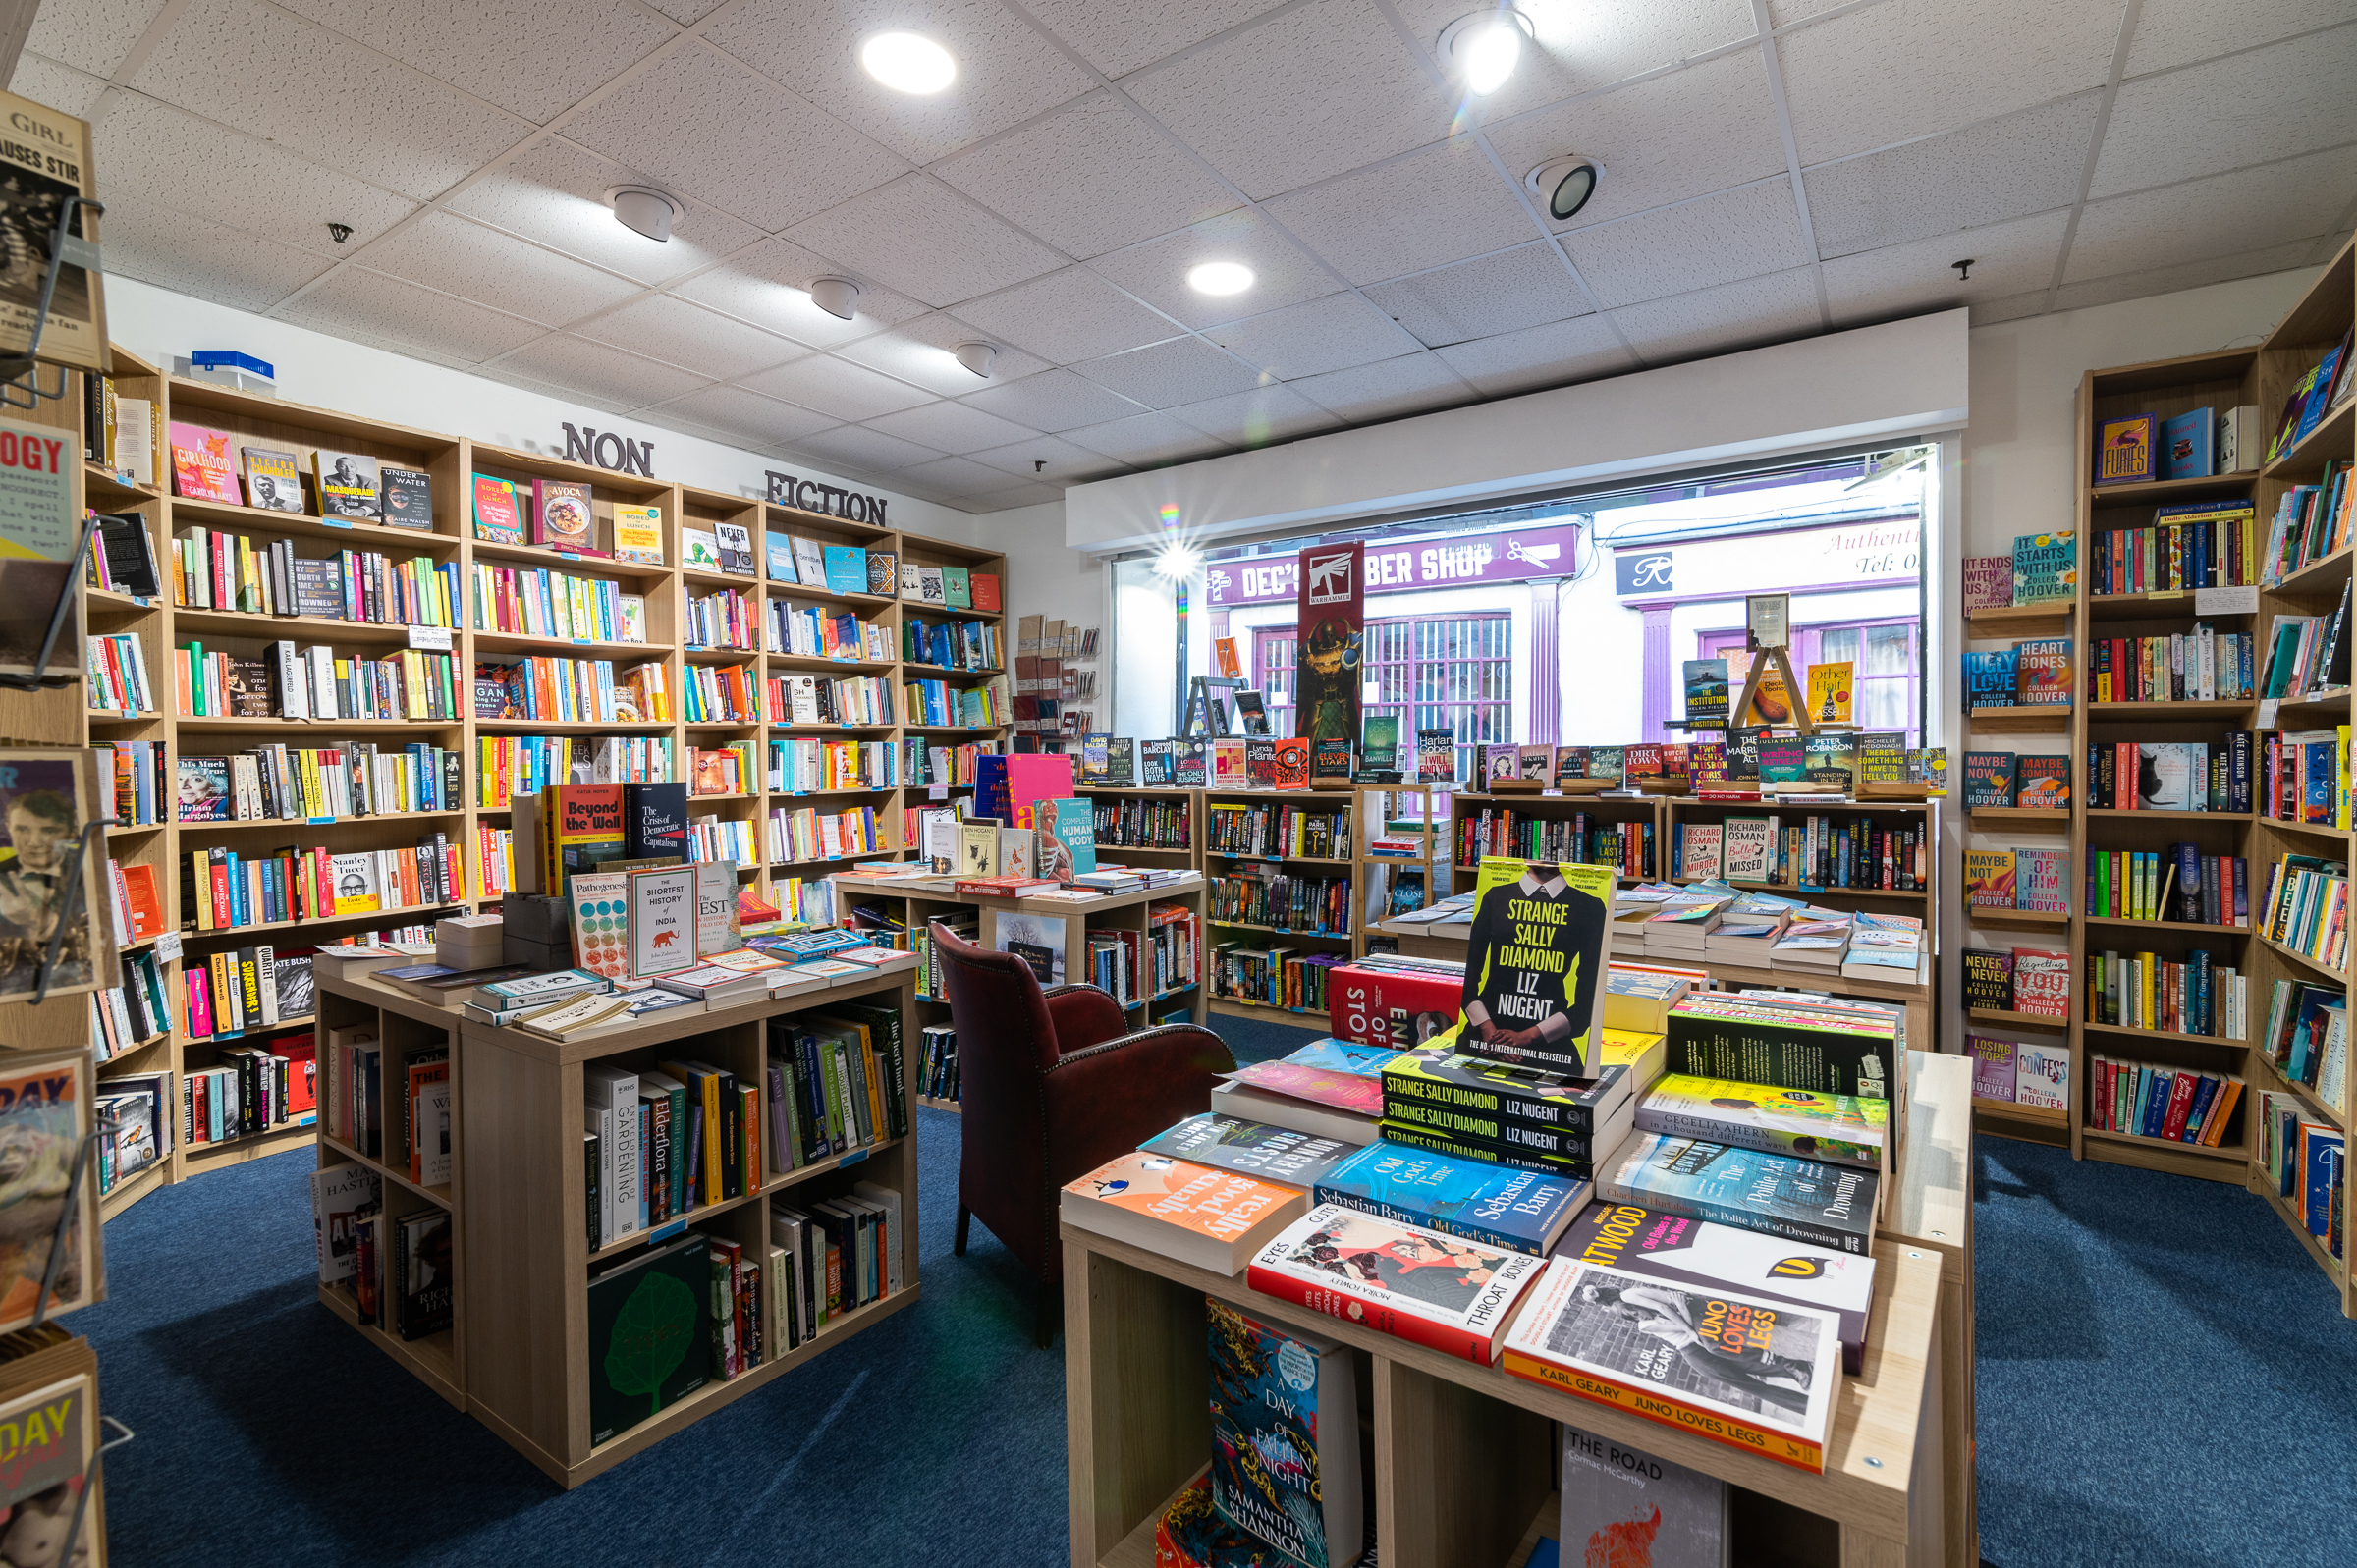 Athlone Bookshop